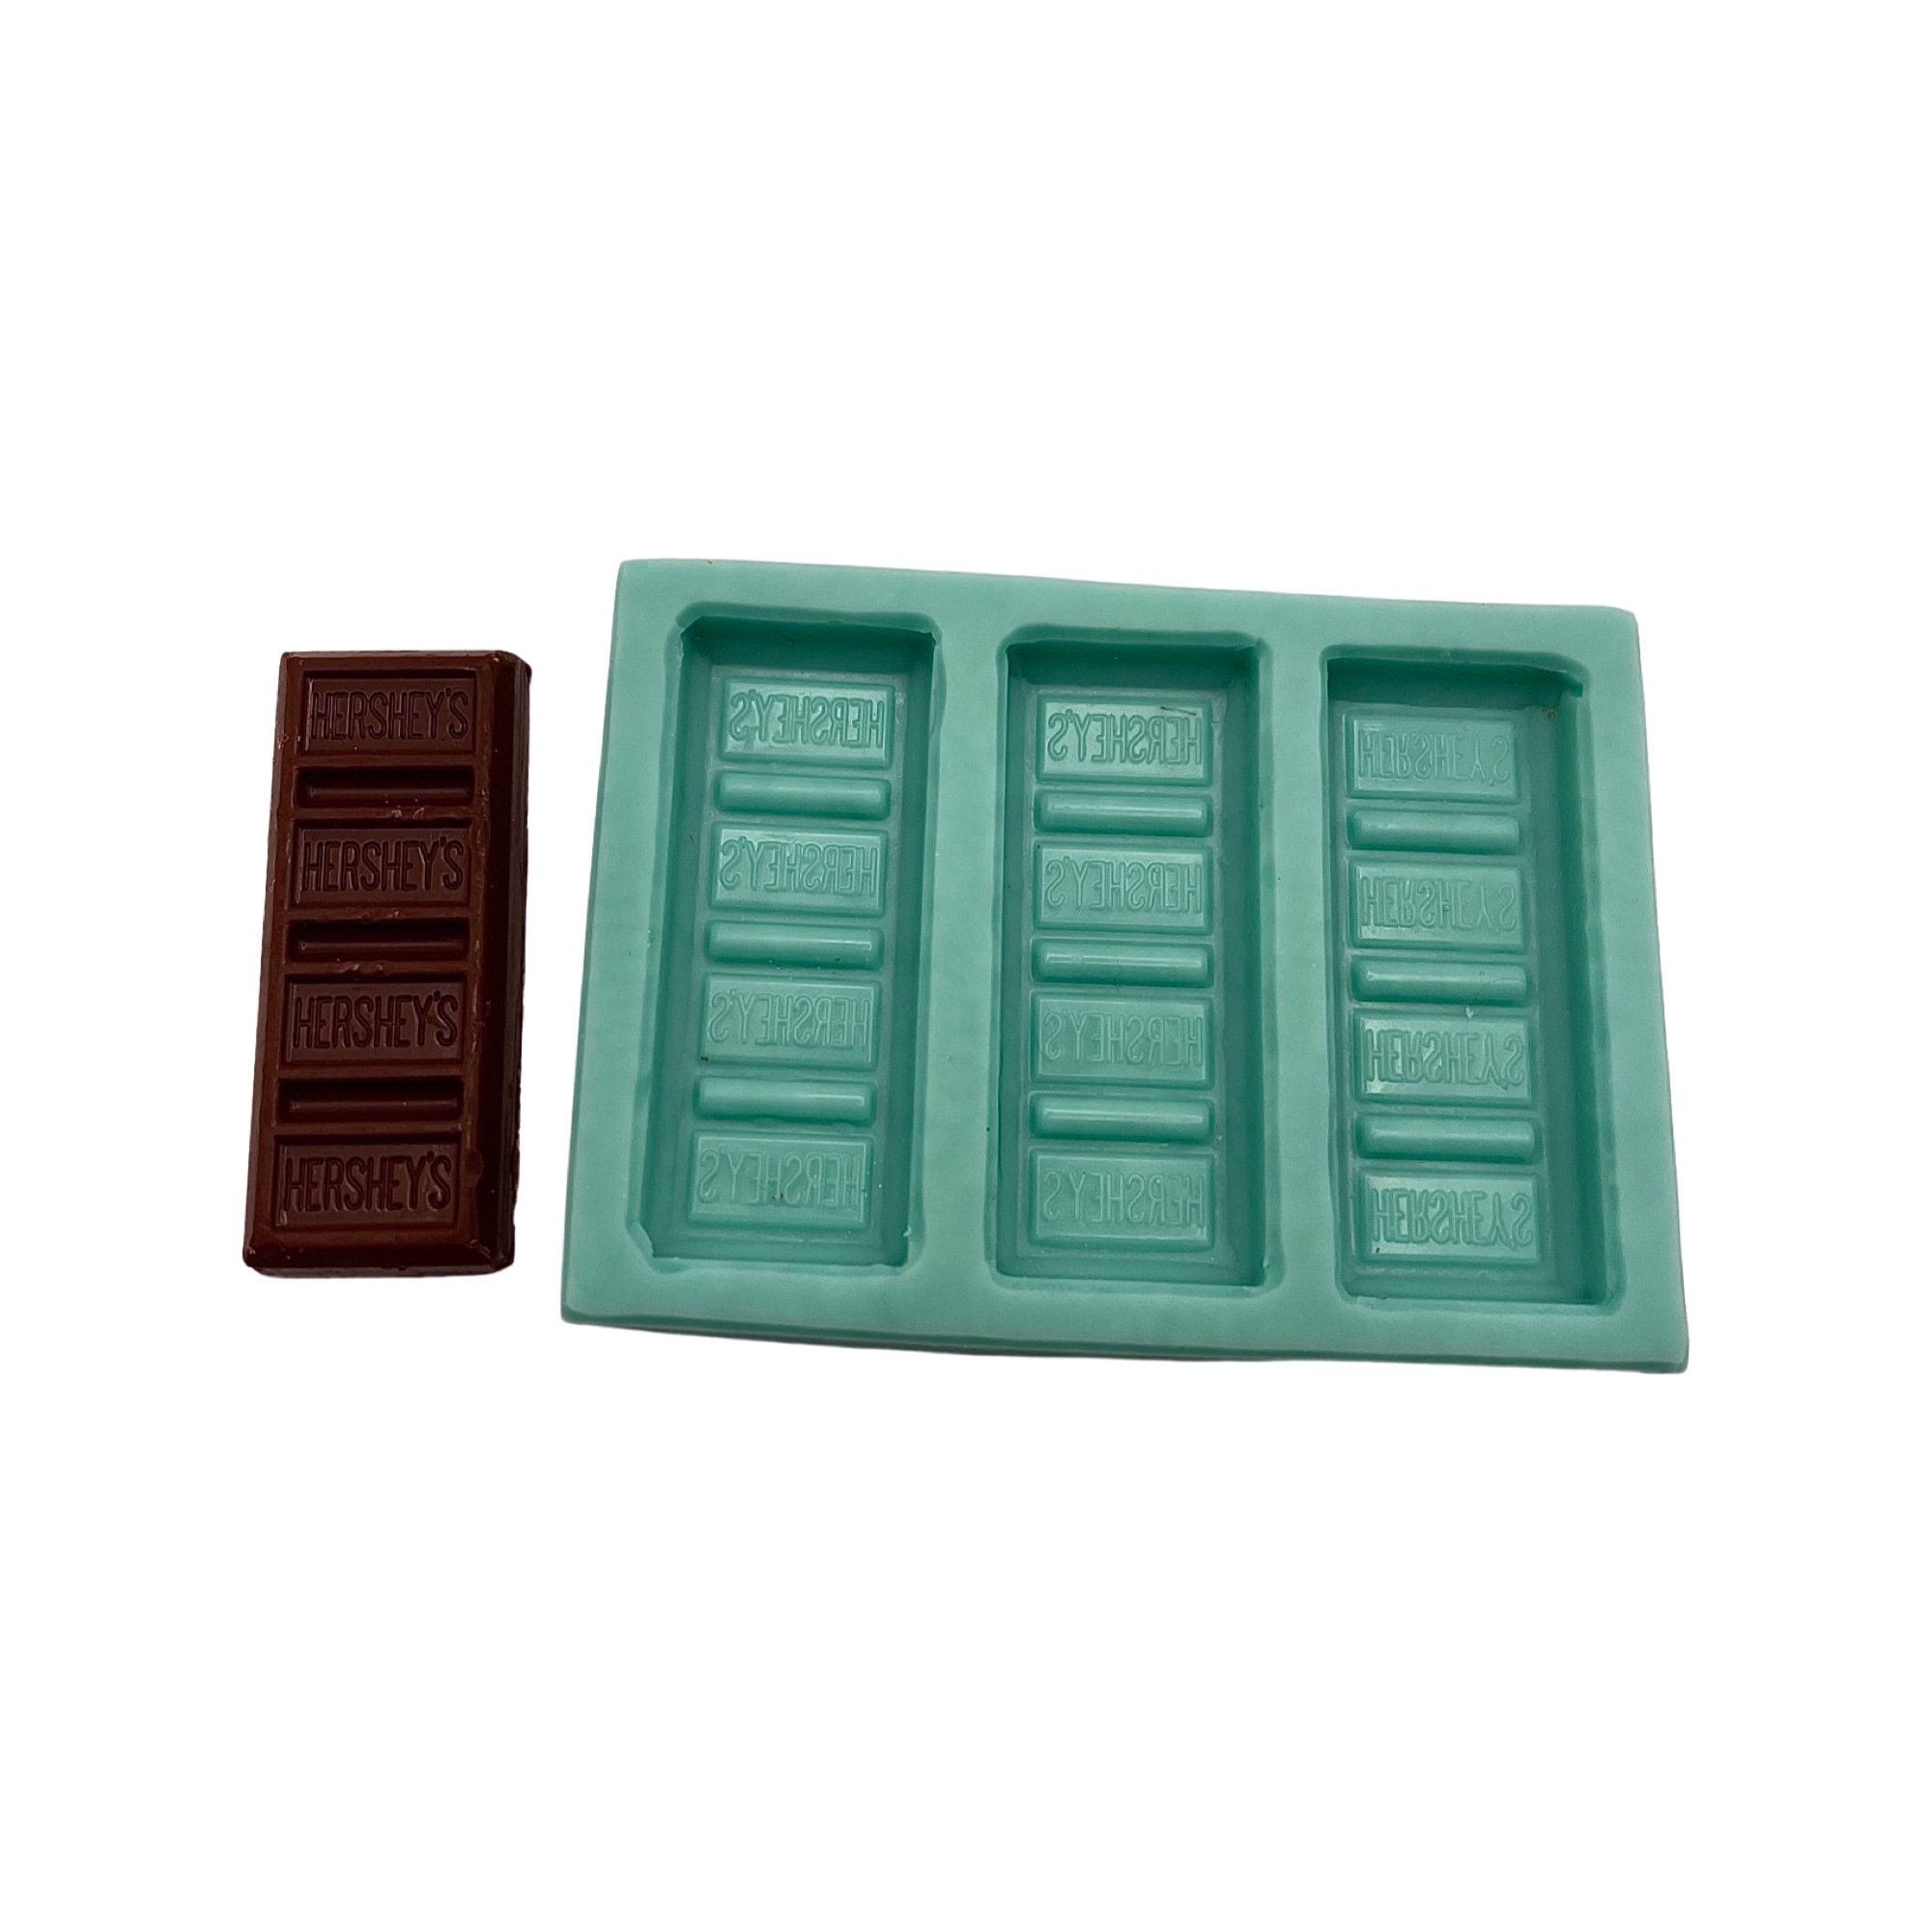 3D Chocolate Bars, Hershey Bars, Candy Bar Silicone Mold, Cupcake